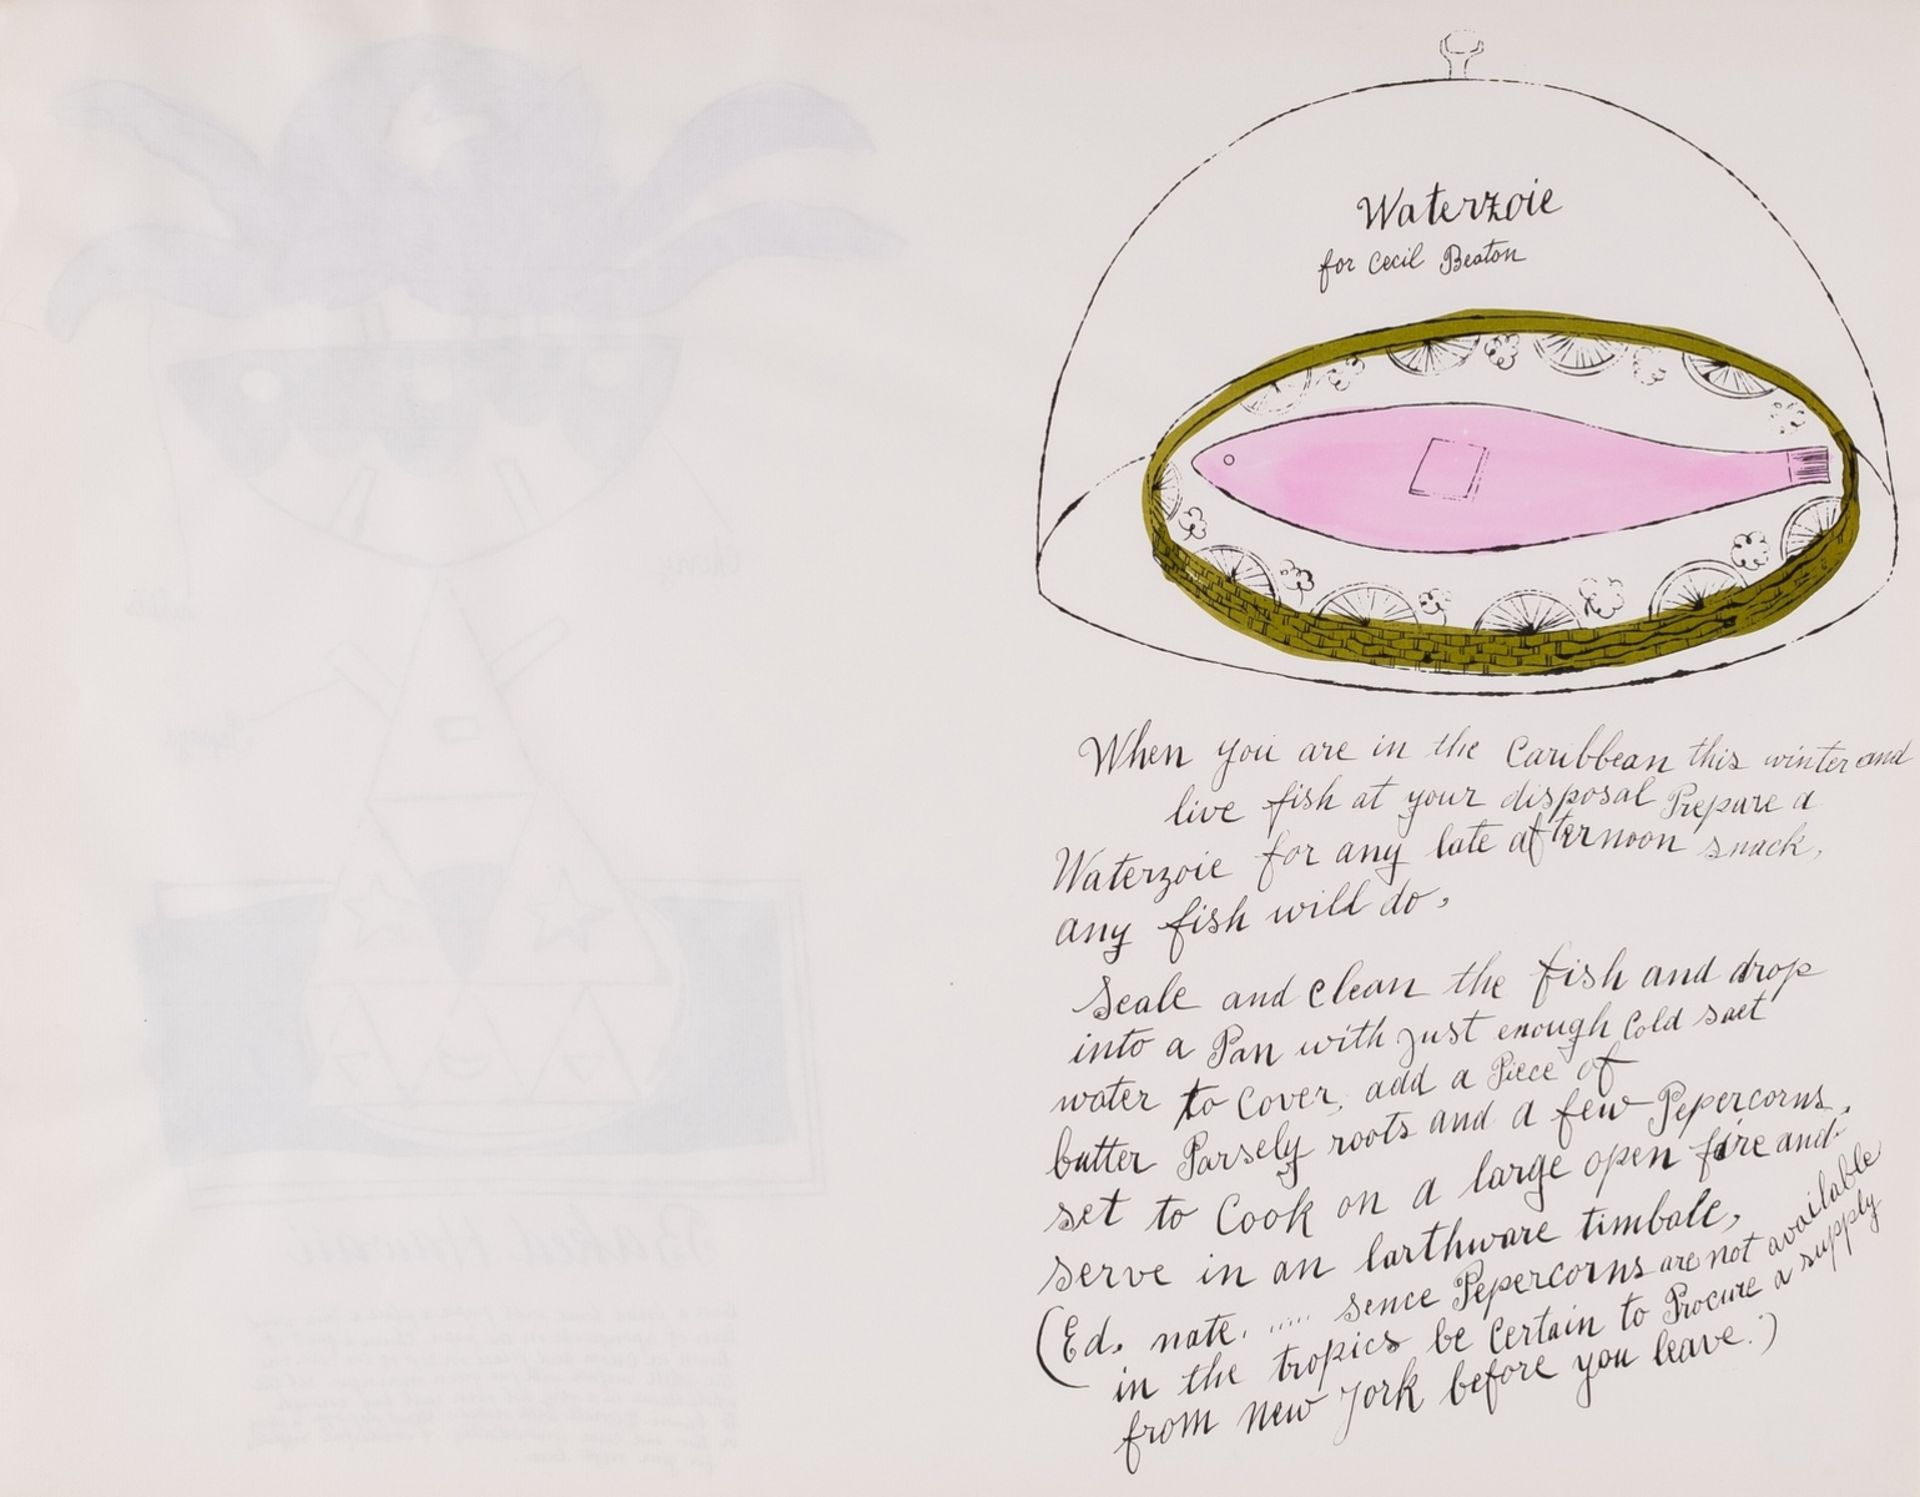 Andy Warhol (1928-1987) Waterzoie and Baked Hawaii, from Wild Raspberries (see Feldman & …